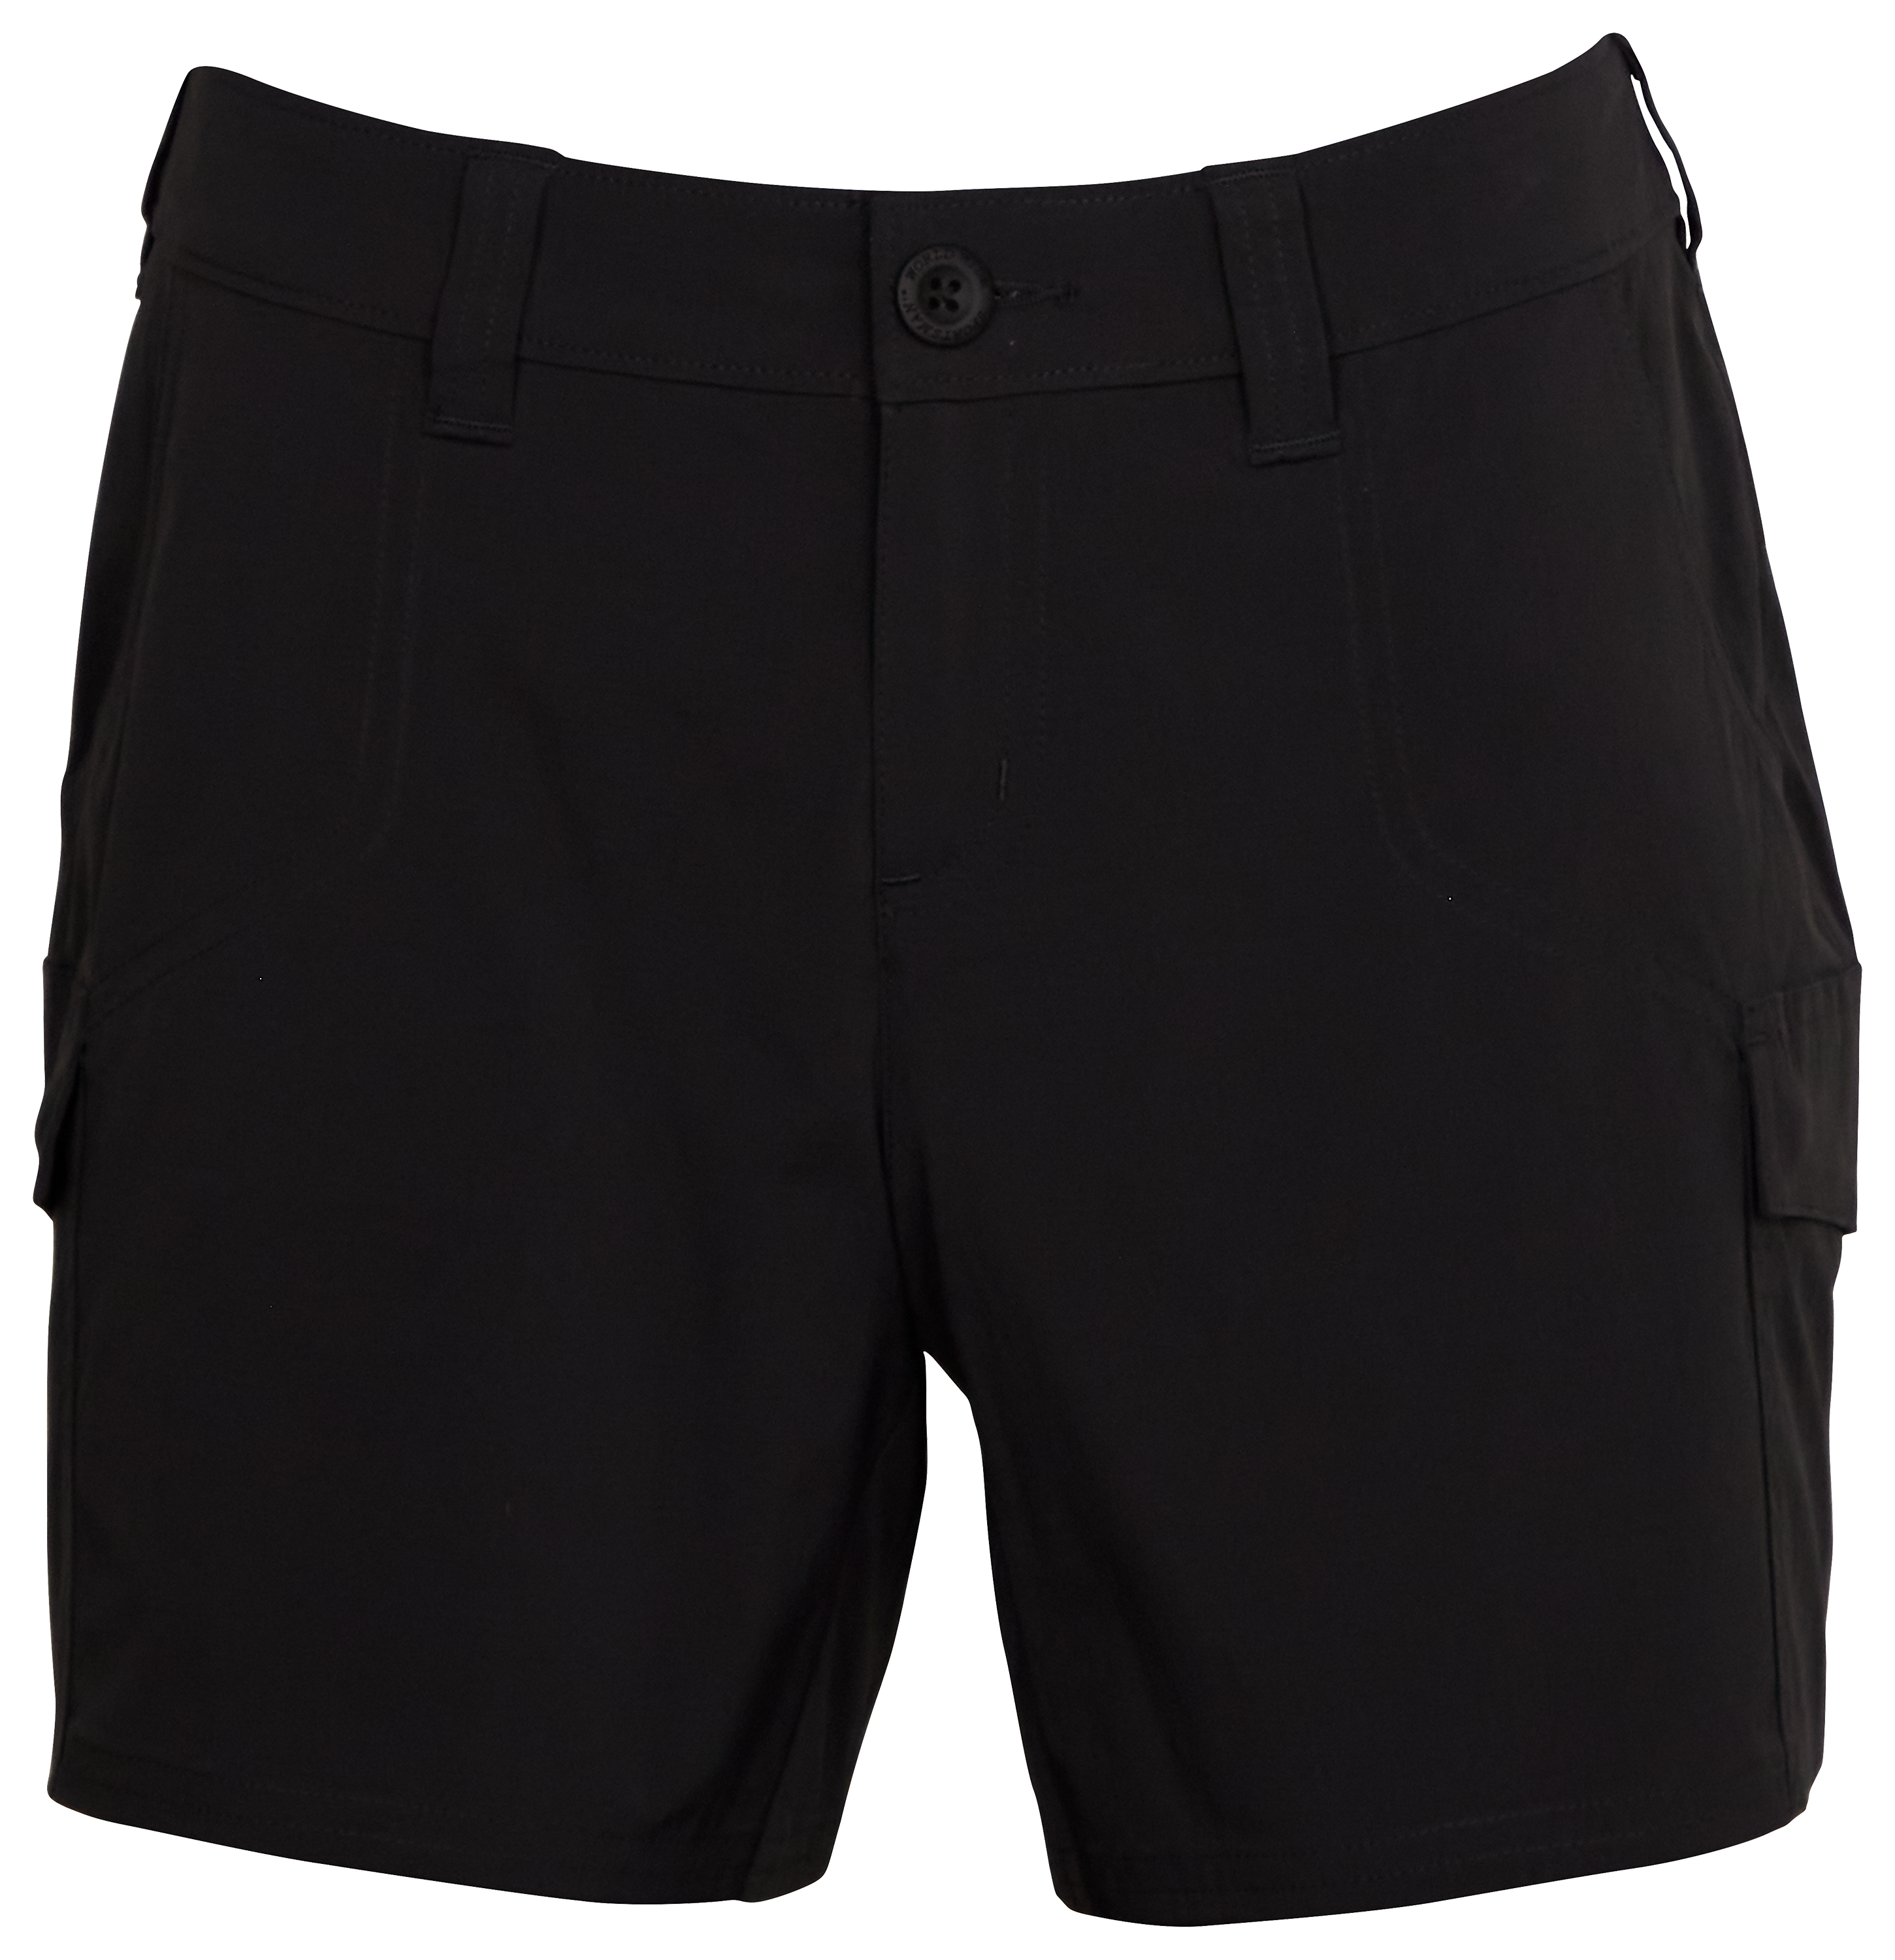 World Wide Sportsman Ripstop Cargo Shorts for Ladies - Jet Black - 16